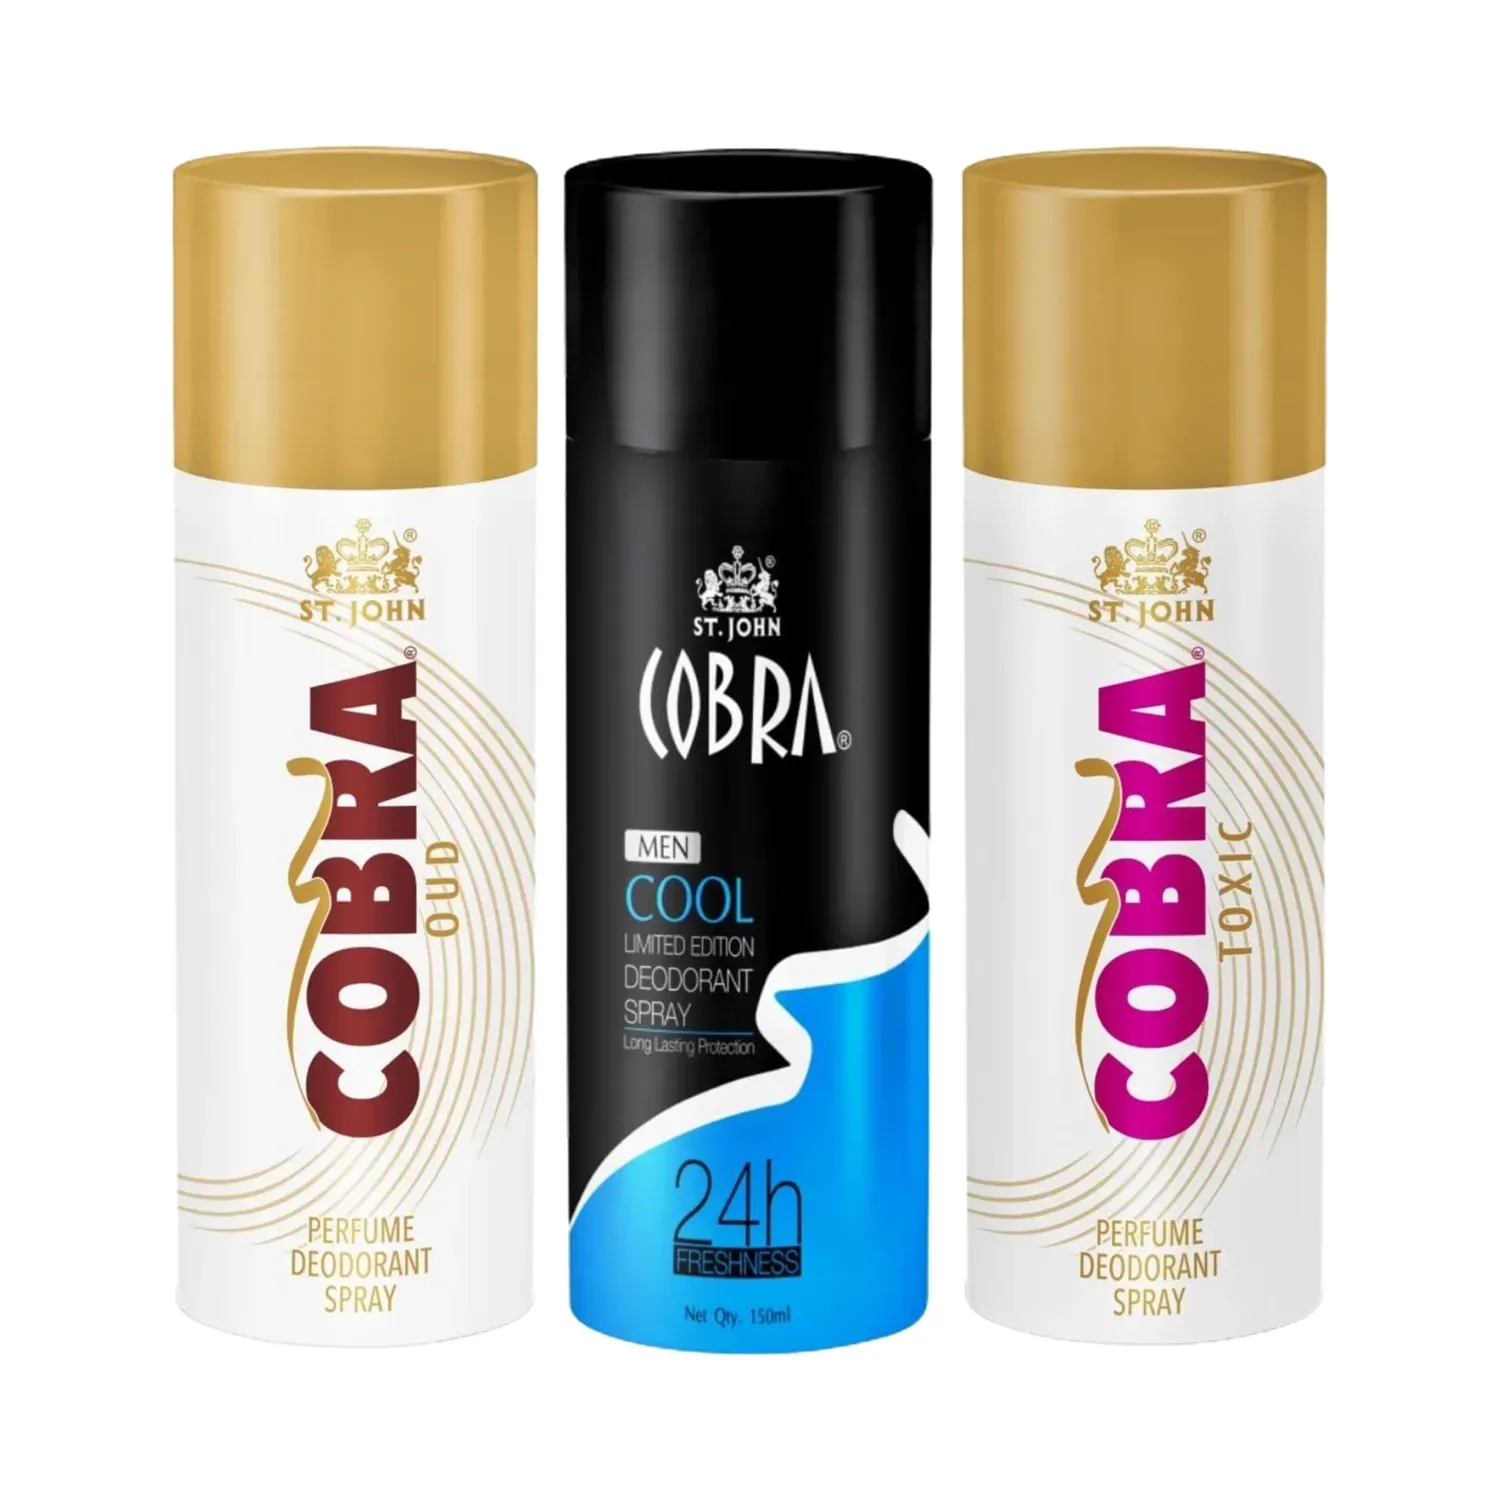 ST.JOHN | ST.JOHN Cobra Oud, Toxic & Cool parfum Deodorant Spray (3 Pcs)